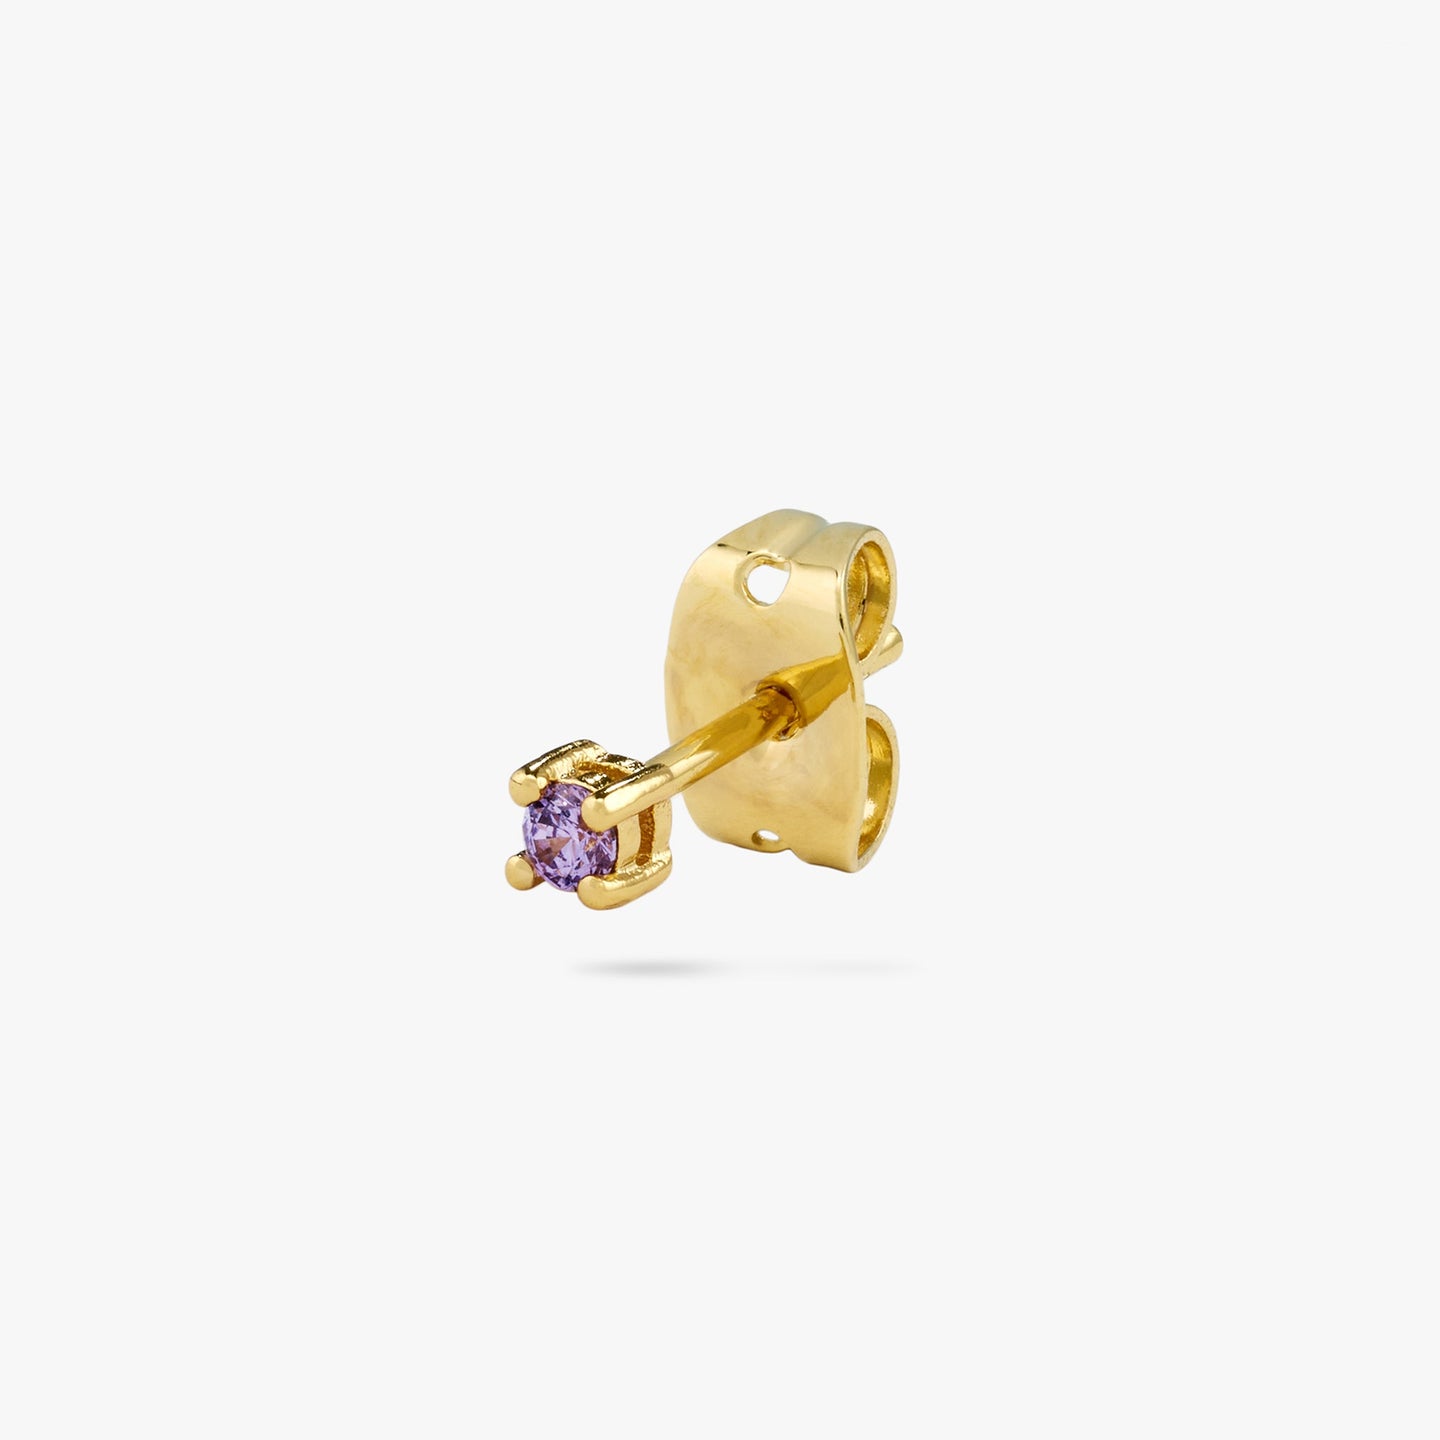 A mini gold stud with a purple cz gem color:null|gold/purple